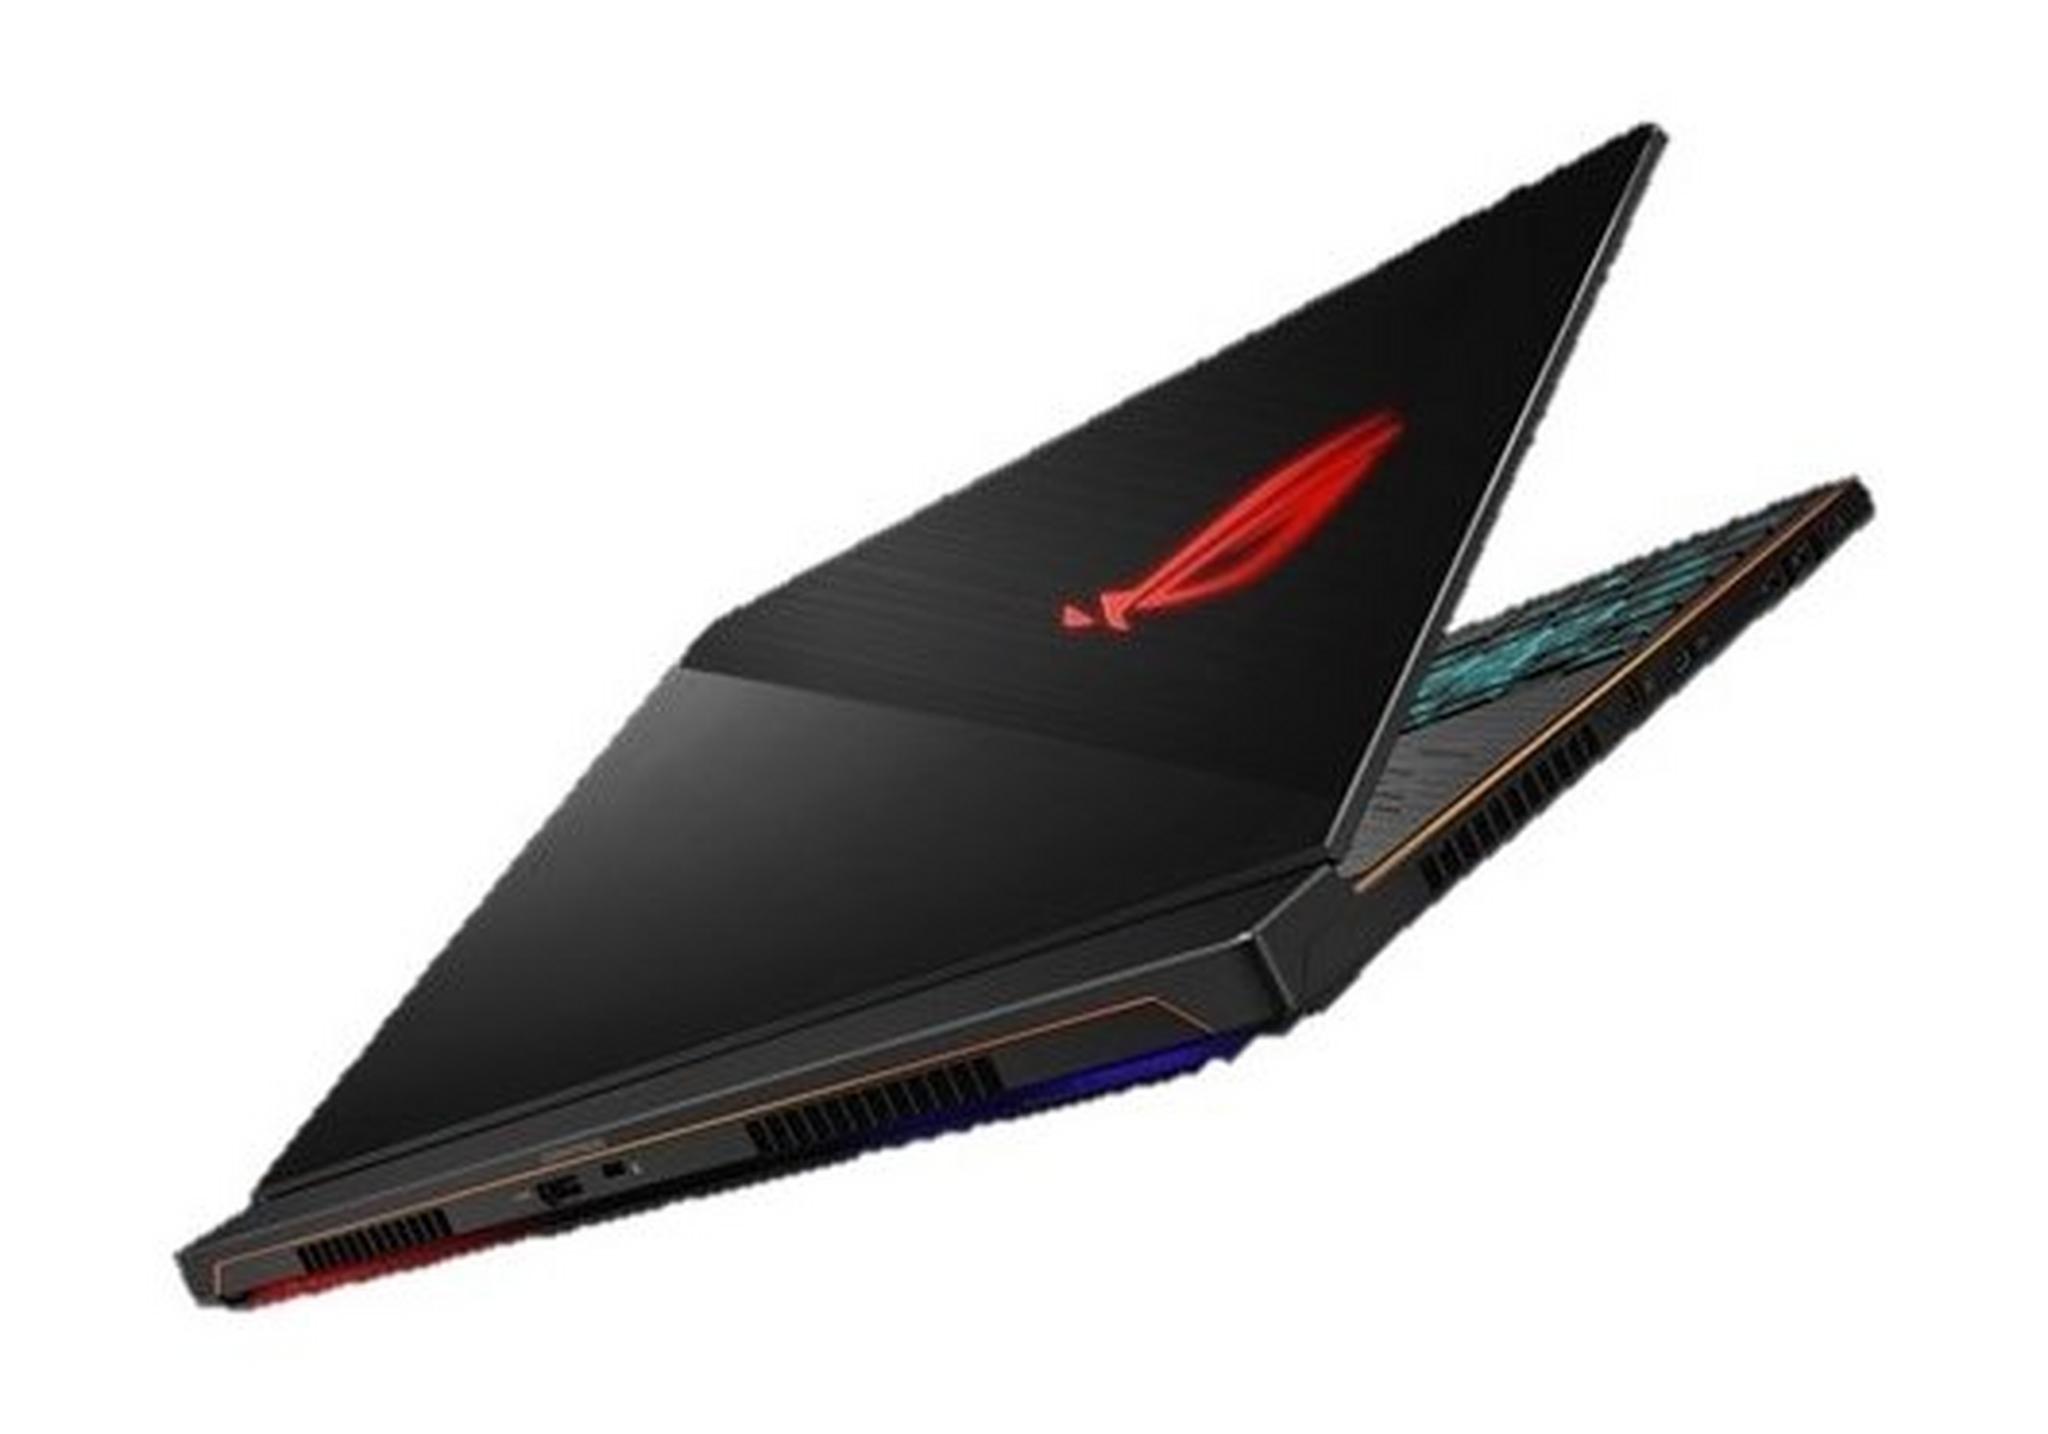 Asus ROG Zephyrus M GeForce RTX 2080Q 8GB Core i7 24GB RAM 512 SSD 15.6 inch Gaming Laptop (GX531GX) - Black